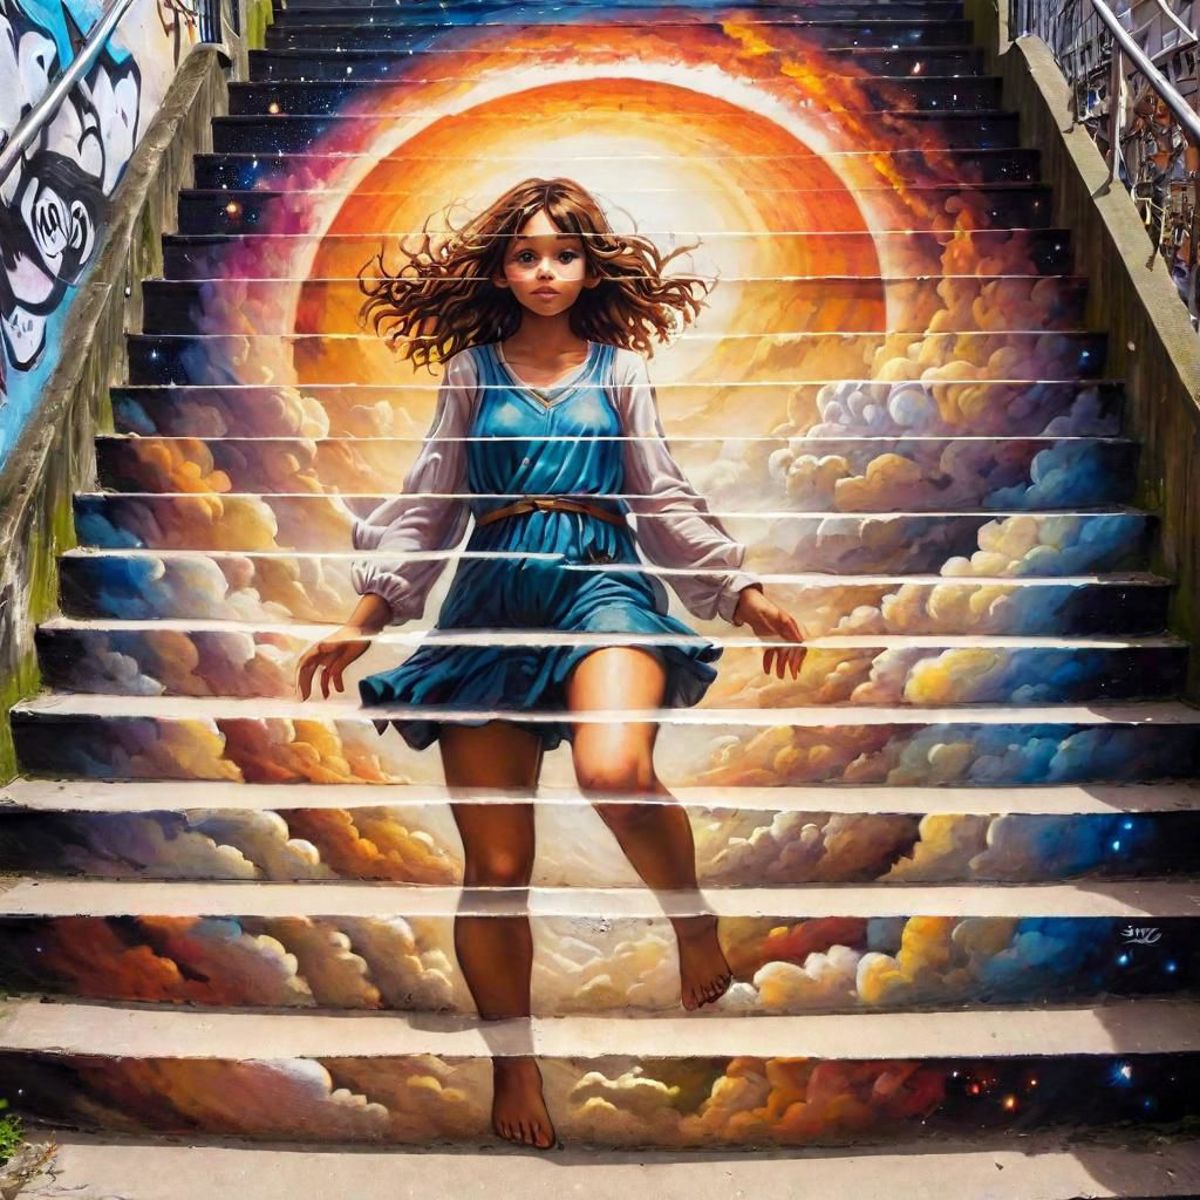 Stair Art XL image by skylar13